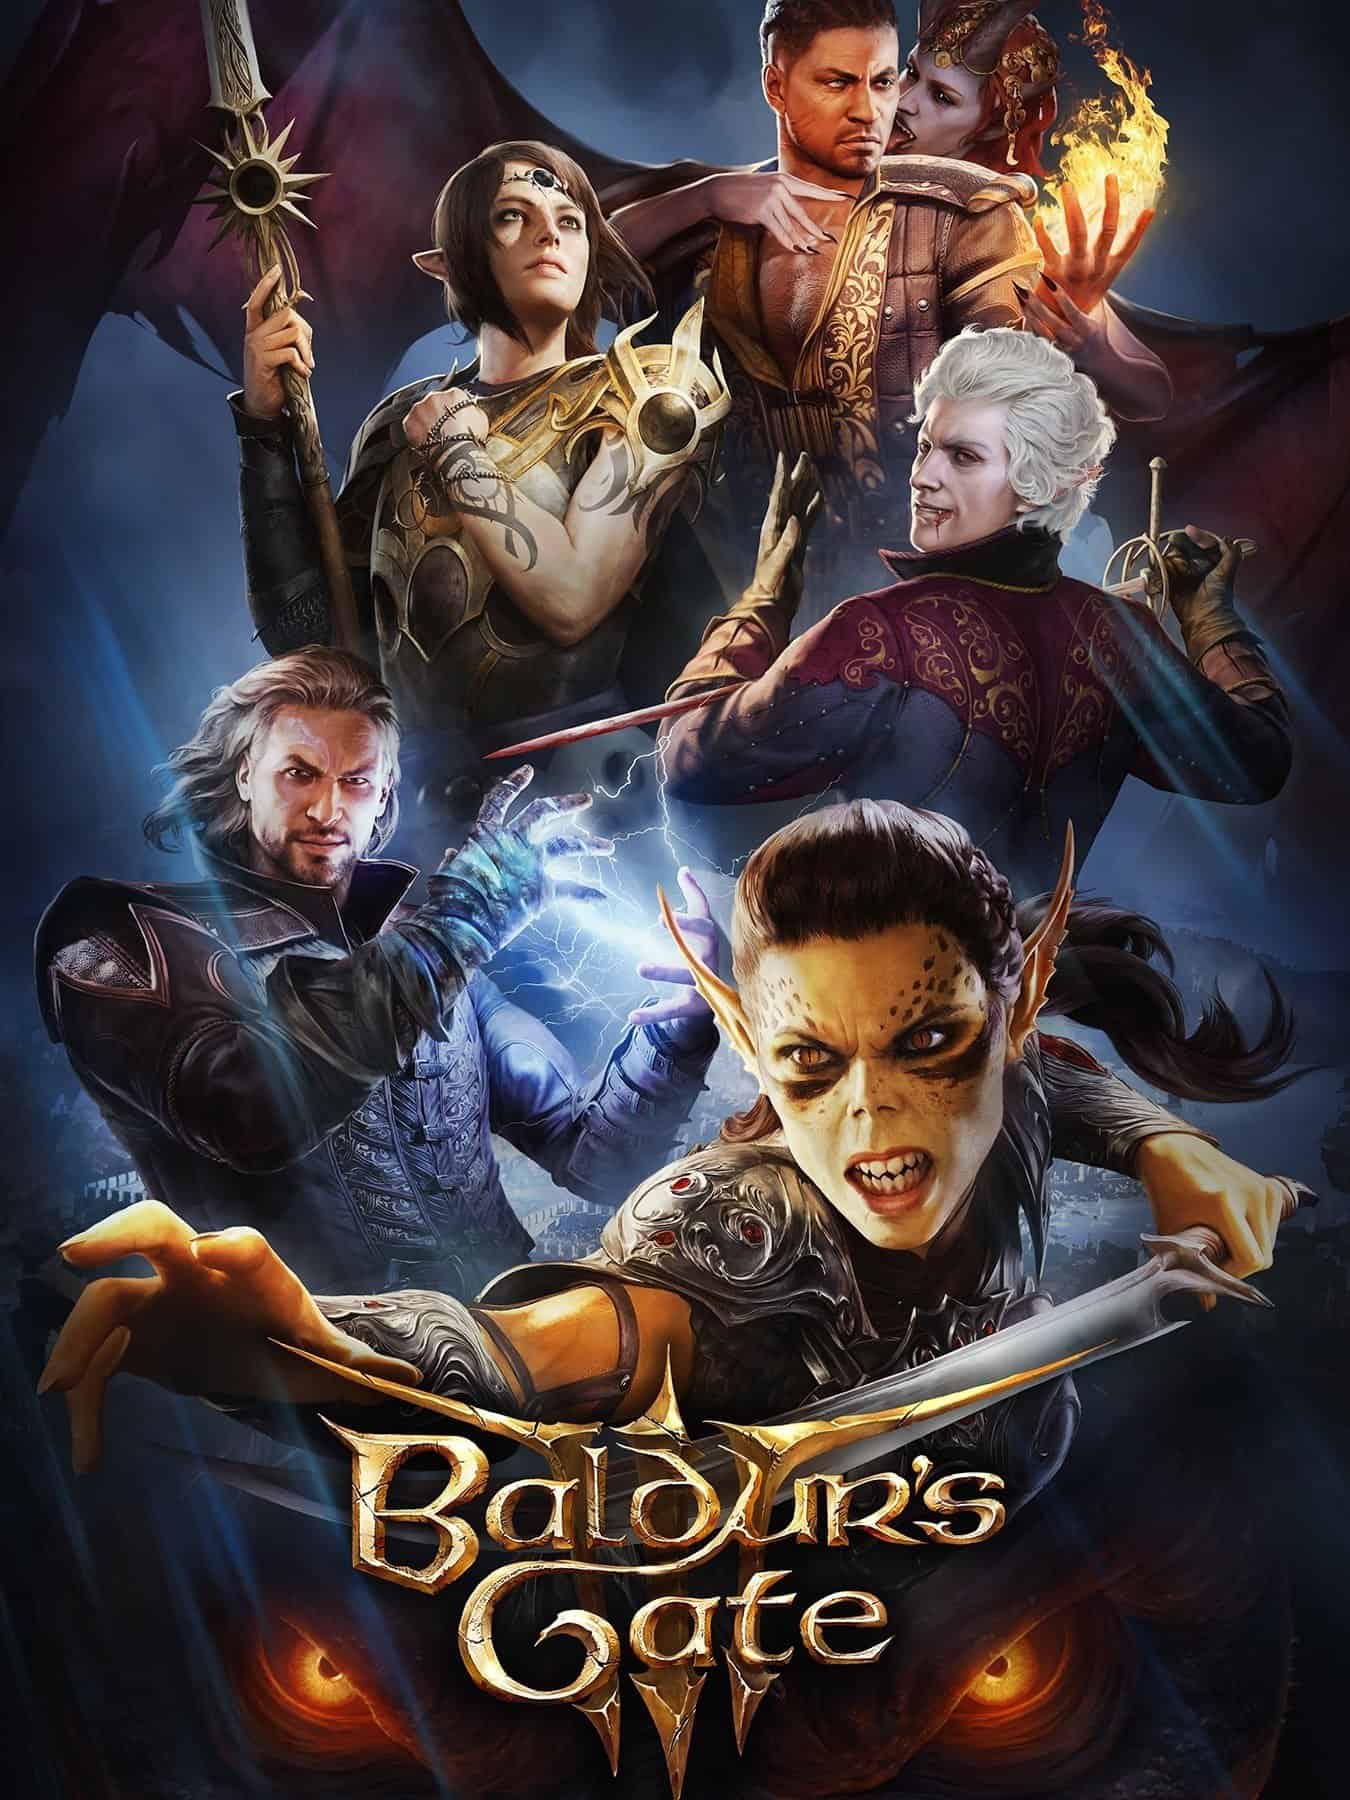 Does Baldur's Gate 3 have crossplay & cross-platform progression? - Dexerto